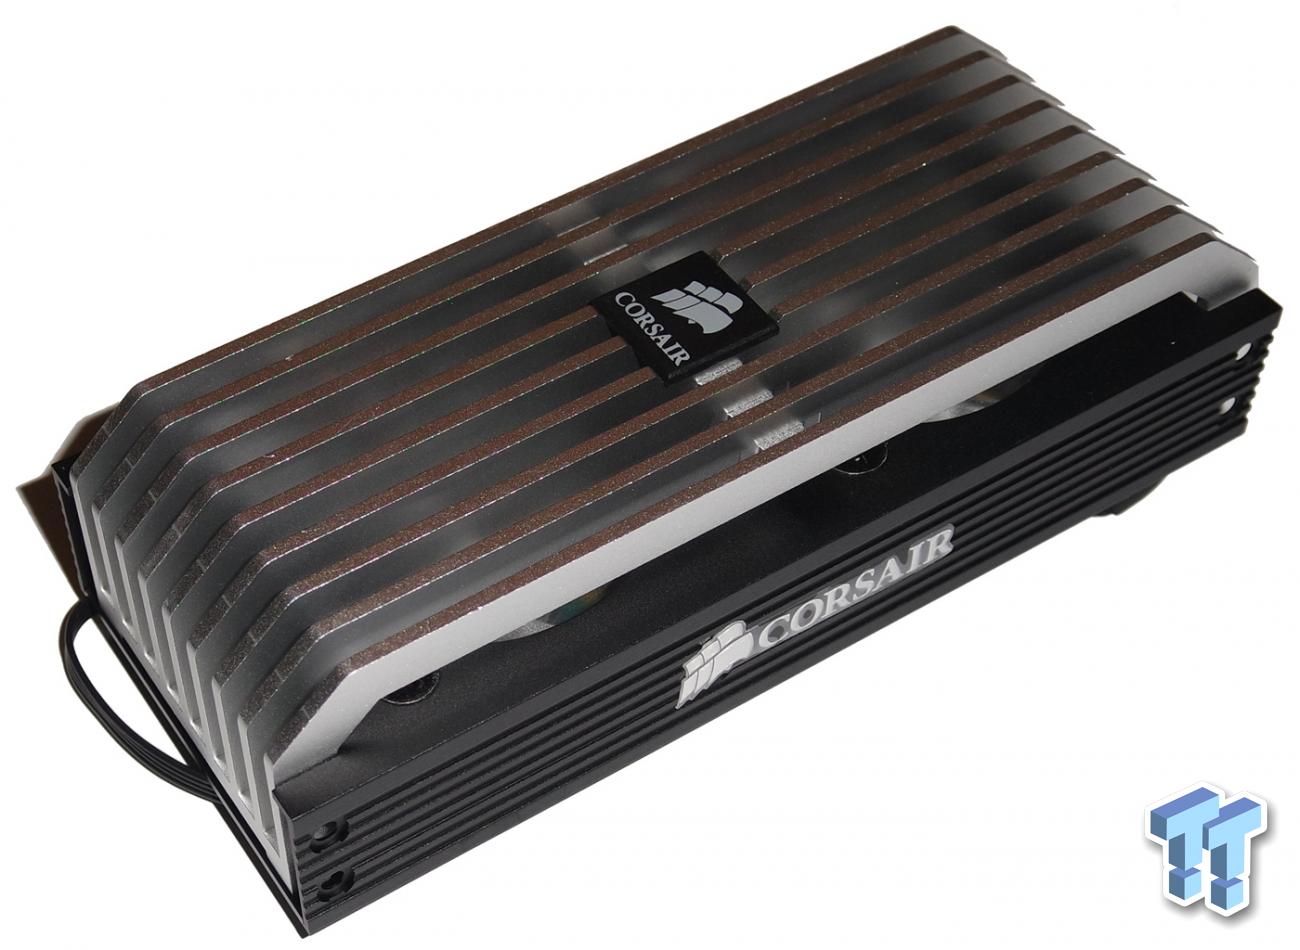 Corsair Dominator Platinum DDR4-3200 16GB Quad-Channel Memory Review